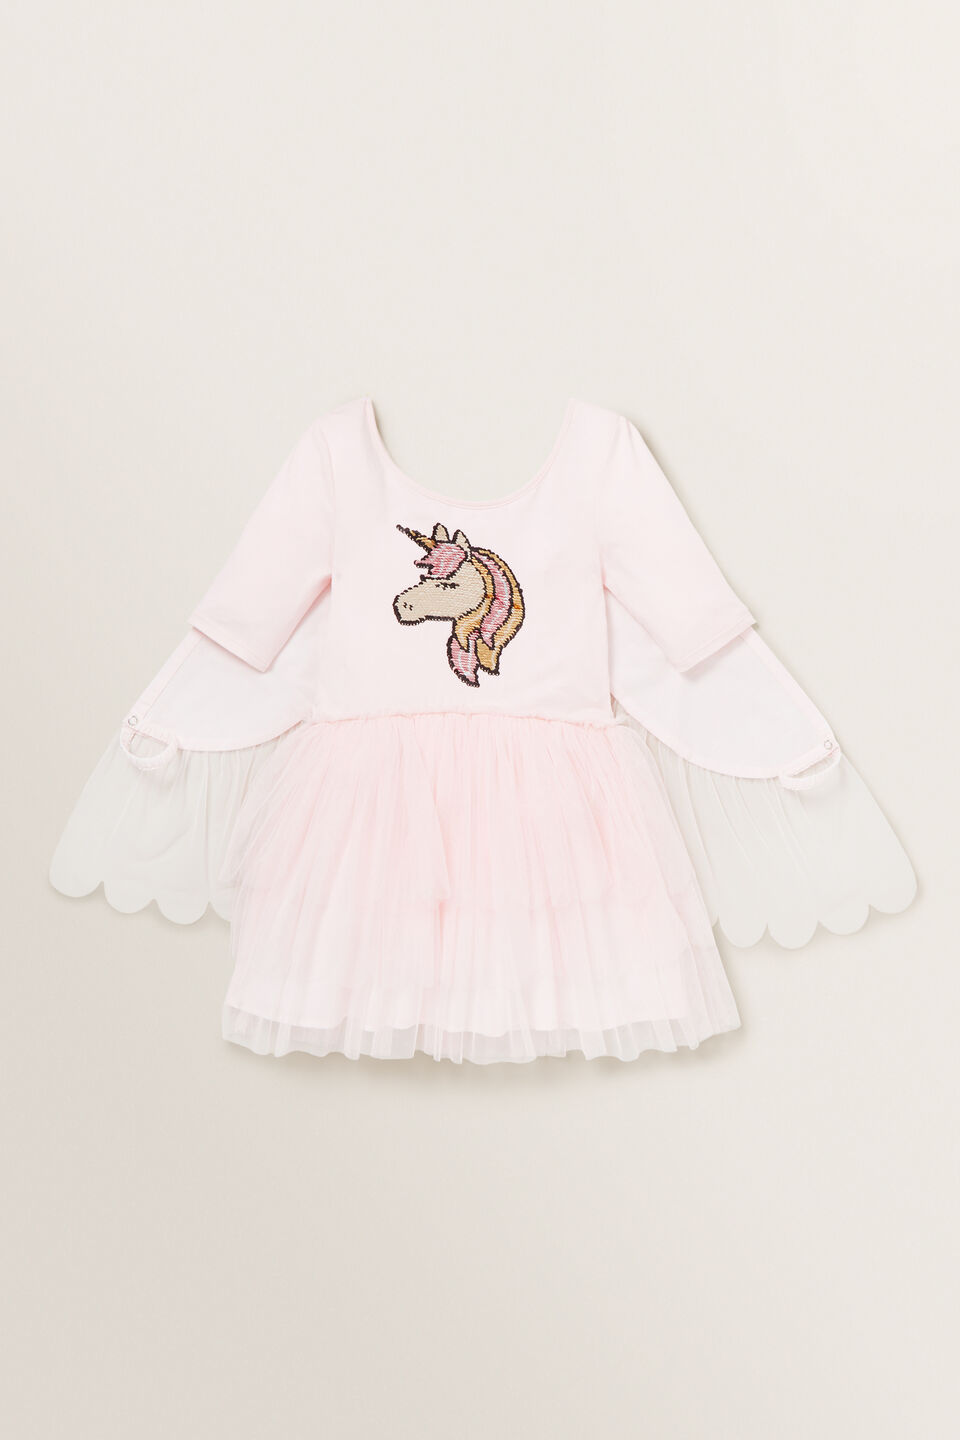 Unicorn Tutu Dress  